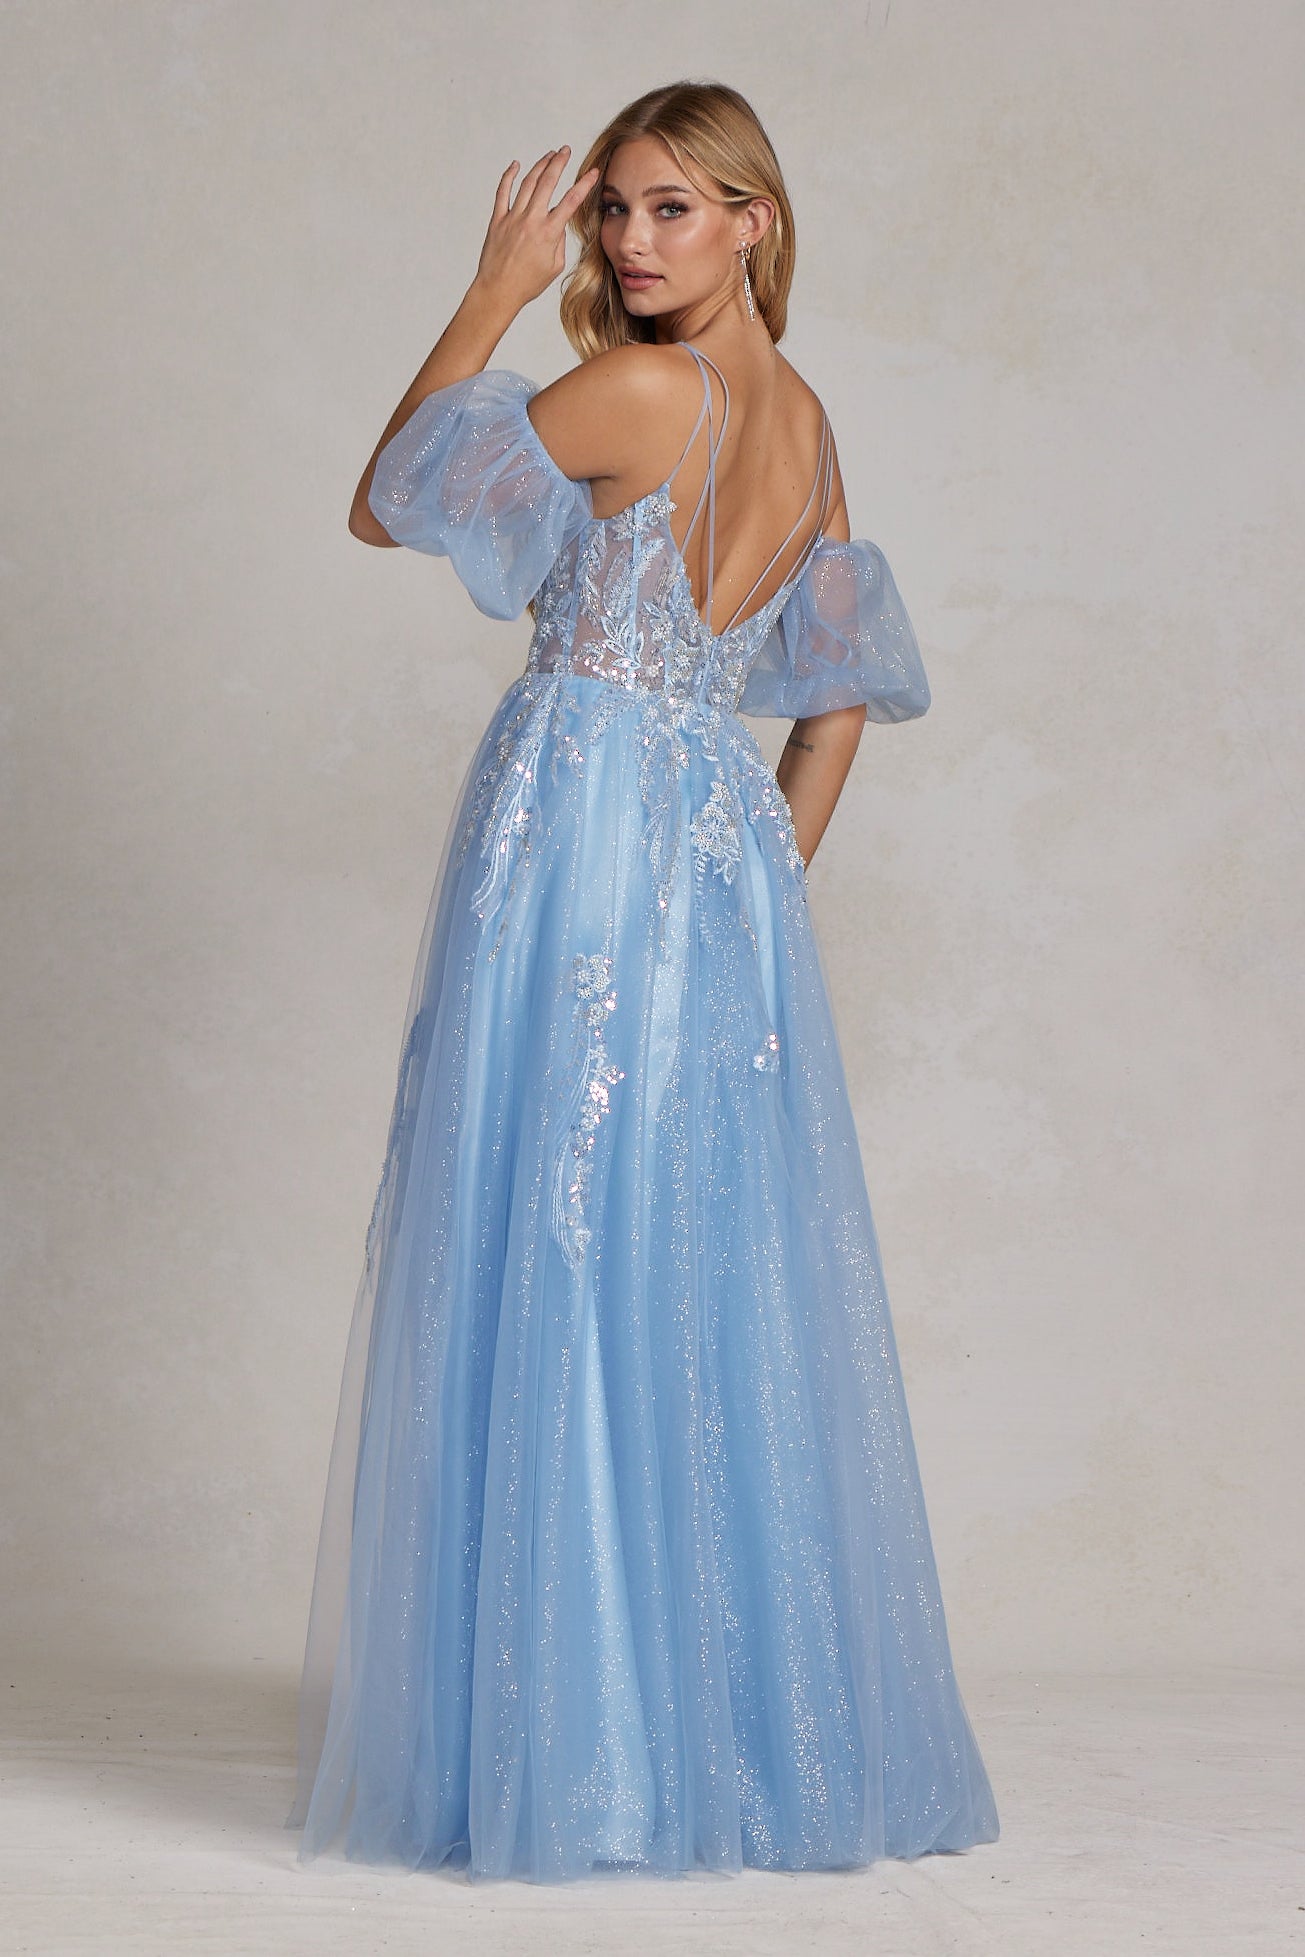 Short Sleeves Embroidered Glitter Side Slit Long Prom Dress NXE1173-Prom Dress-smcfashion.com